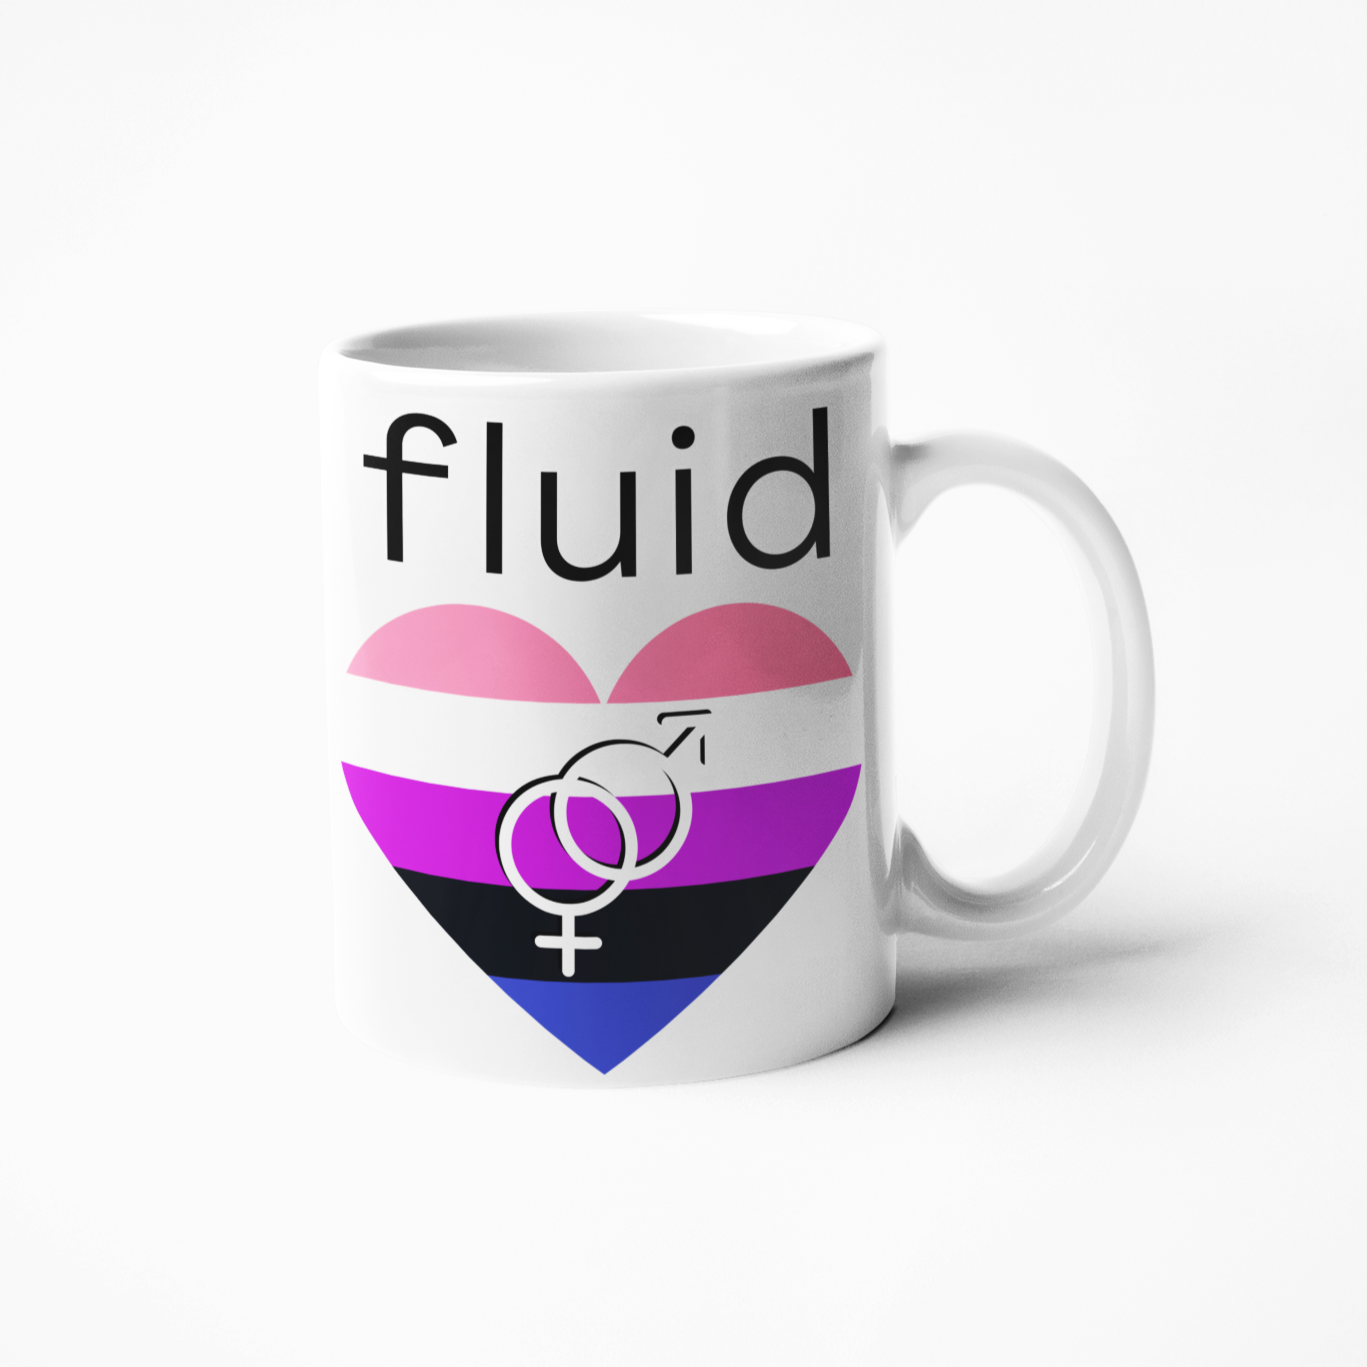 Gender fluid coffee mug